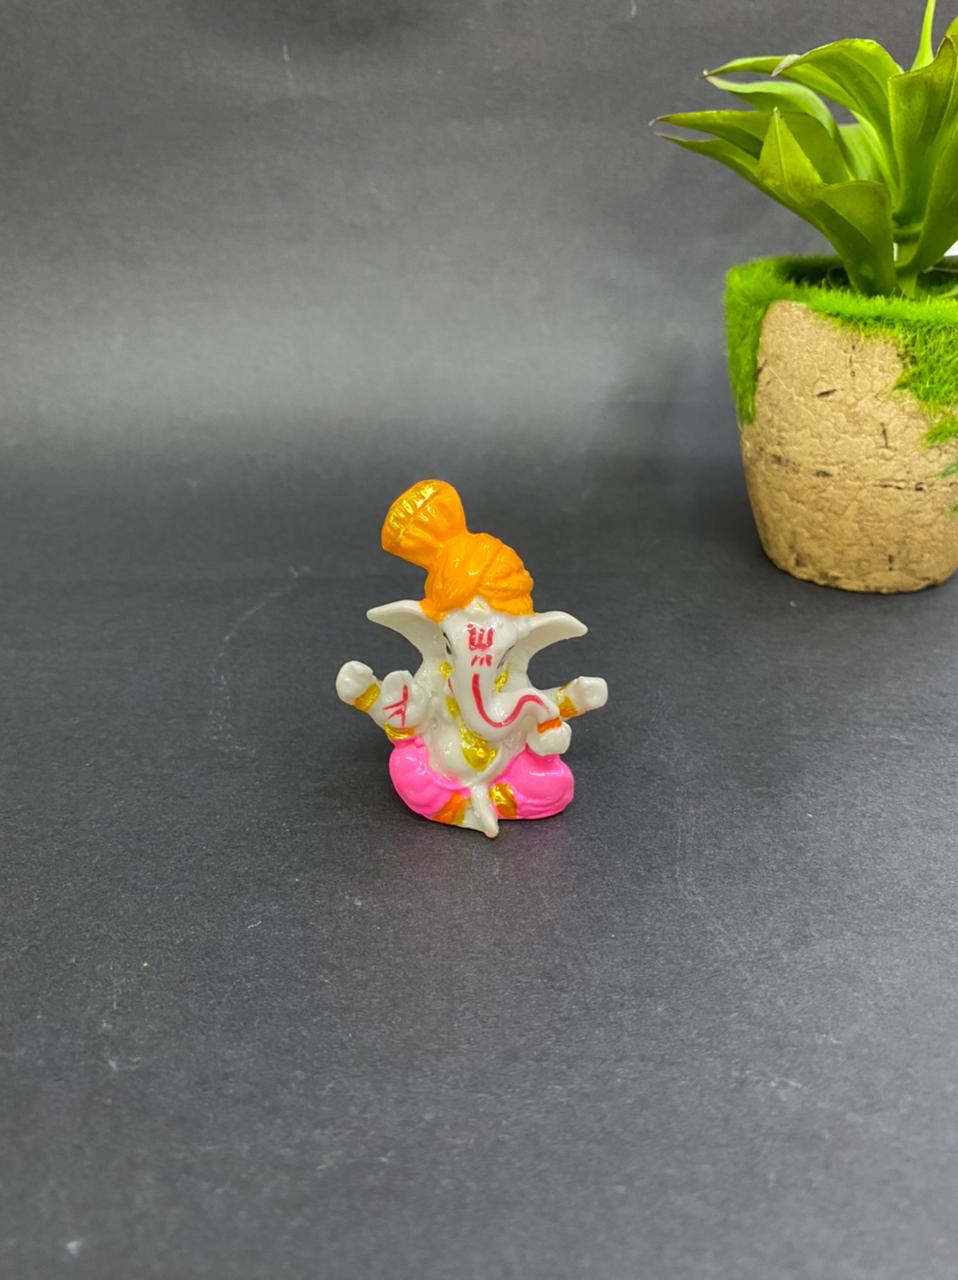 Turban Ganesha Cute Figure For Car Dashboard Spiritual Décor By Tamrapatra